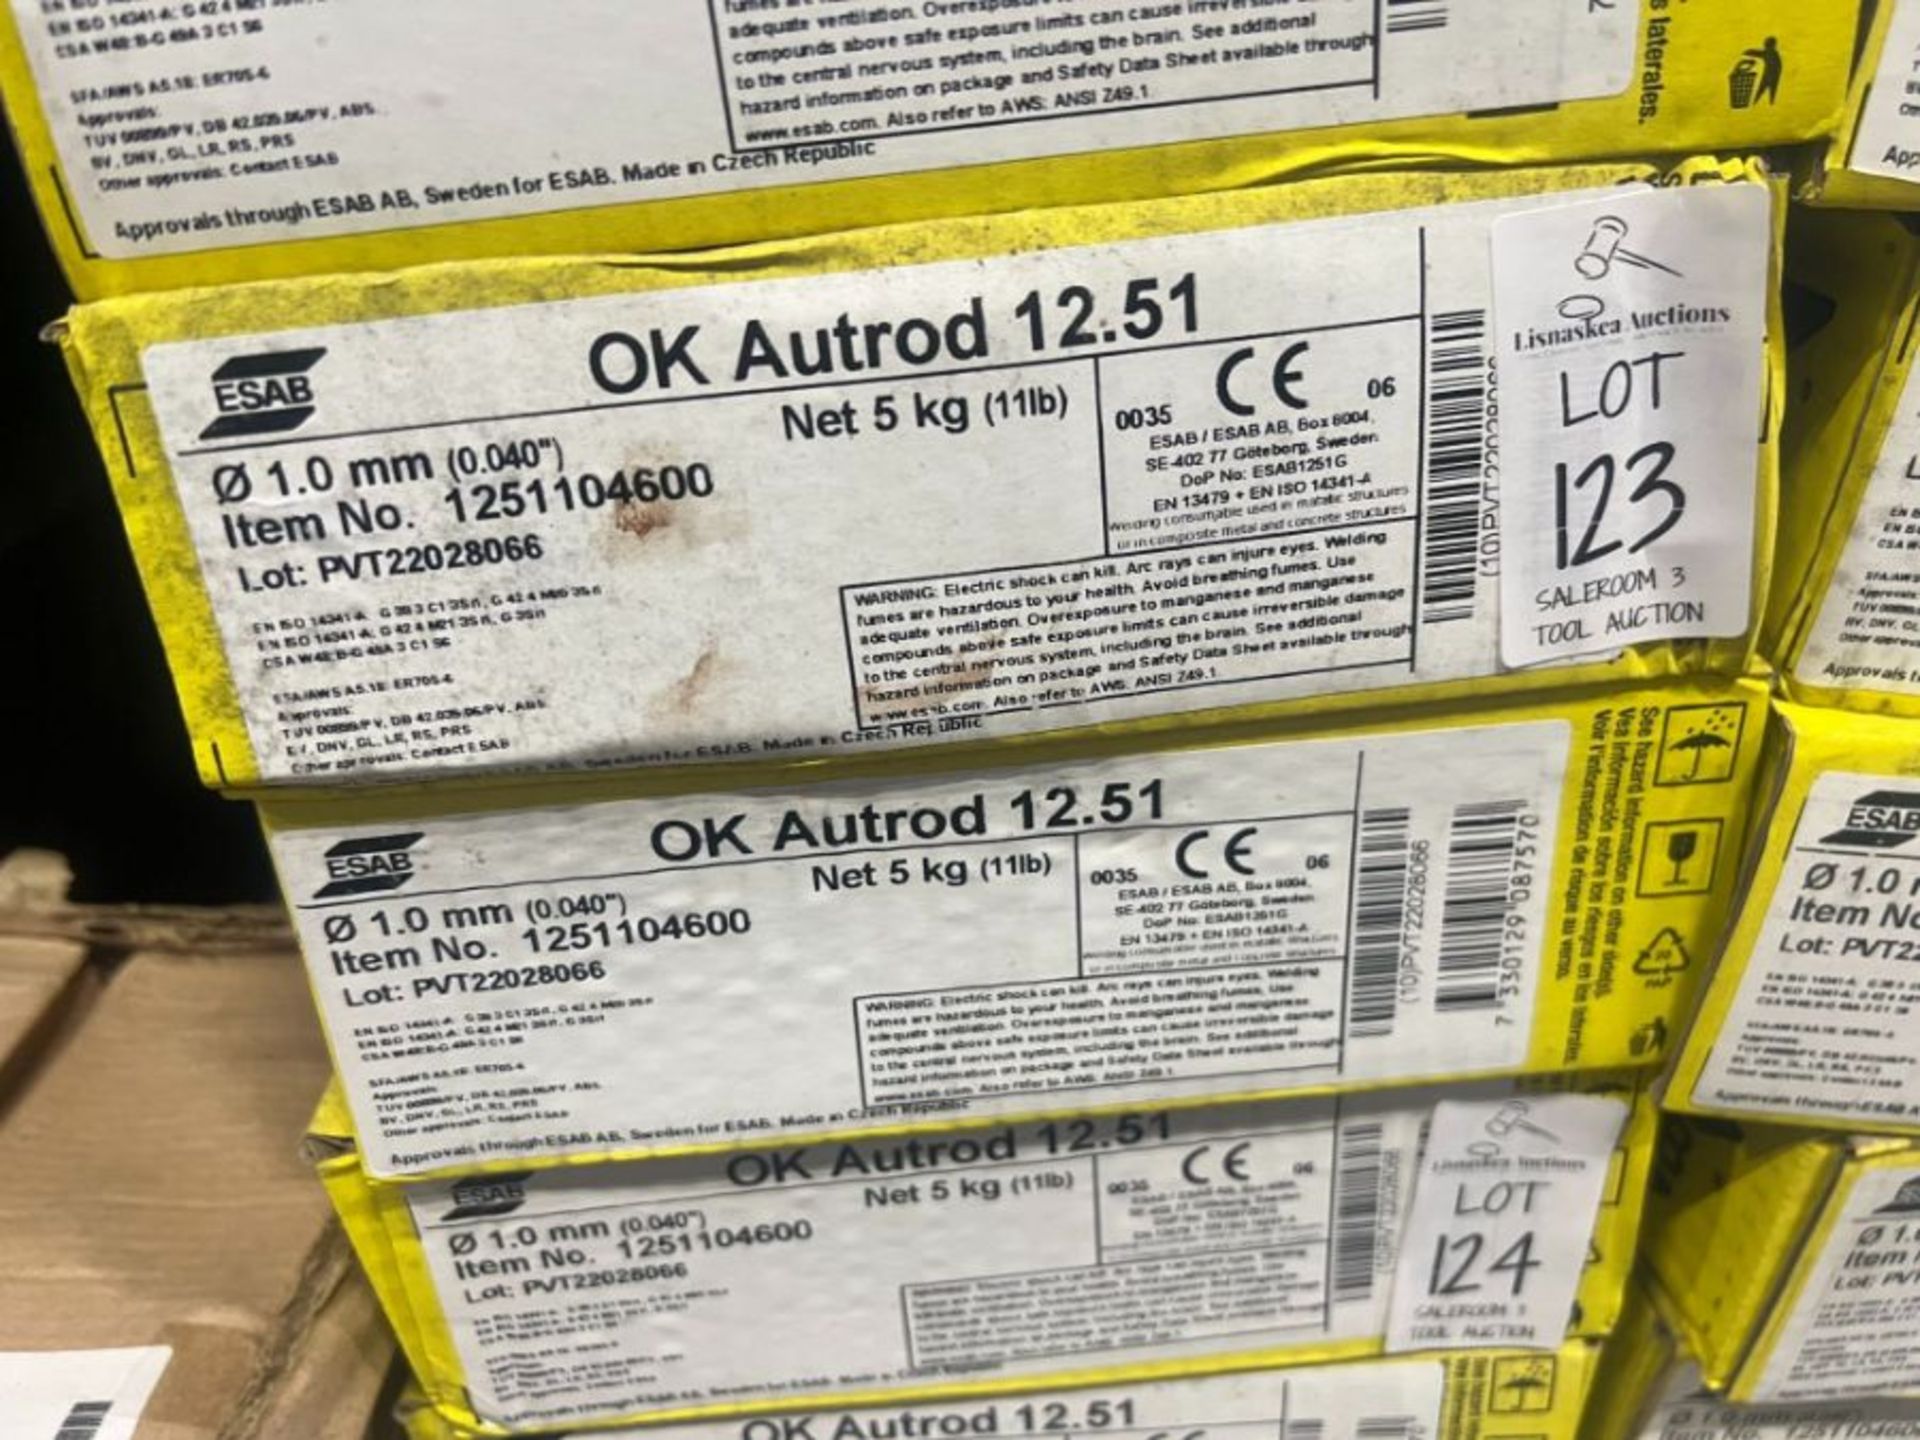 2X BOXES OF ESAB OK AUTROD 12.51 1MM WELDING WIRE (5KG)